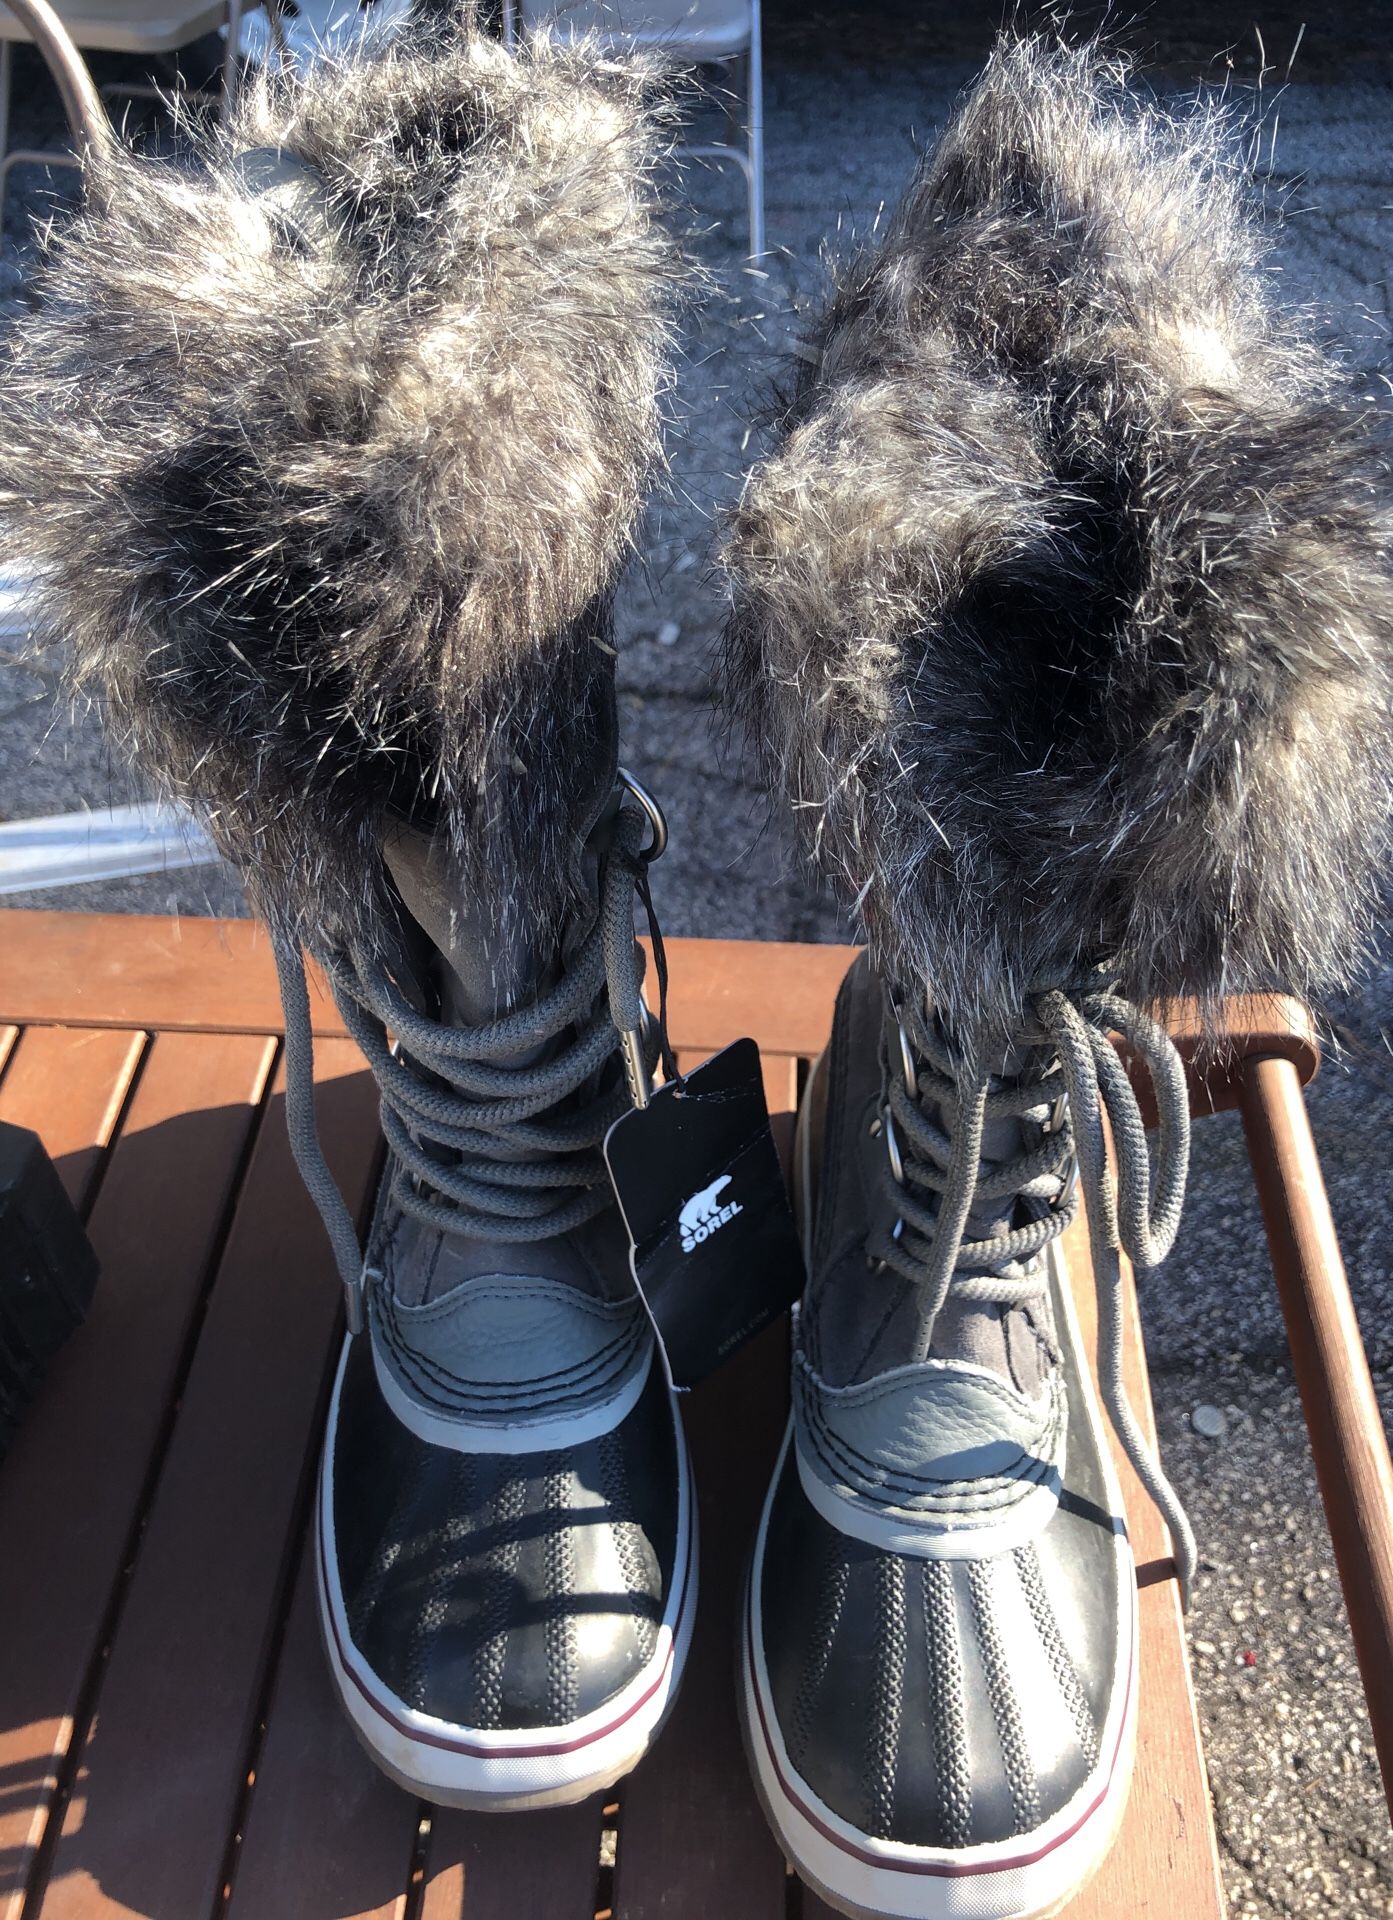 Sorel boots size 7